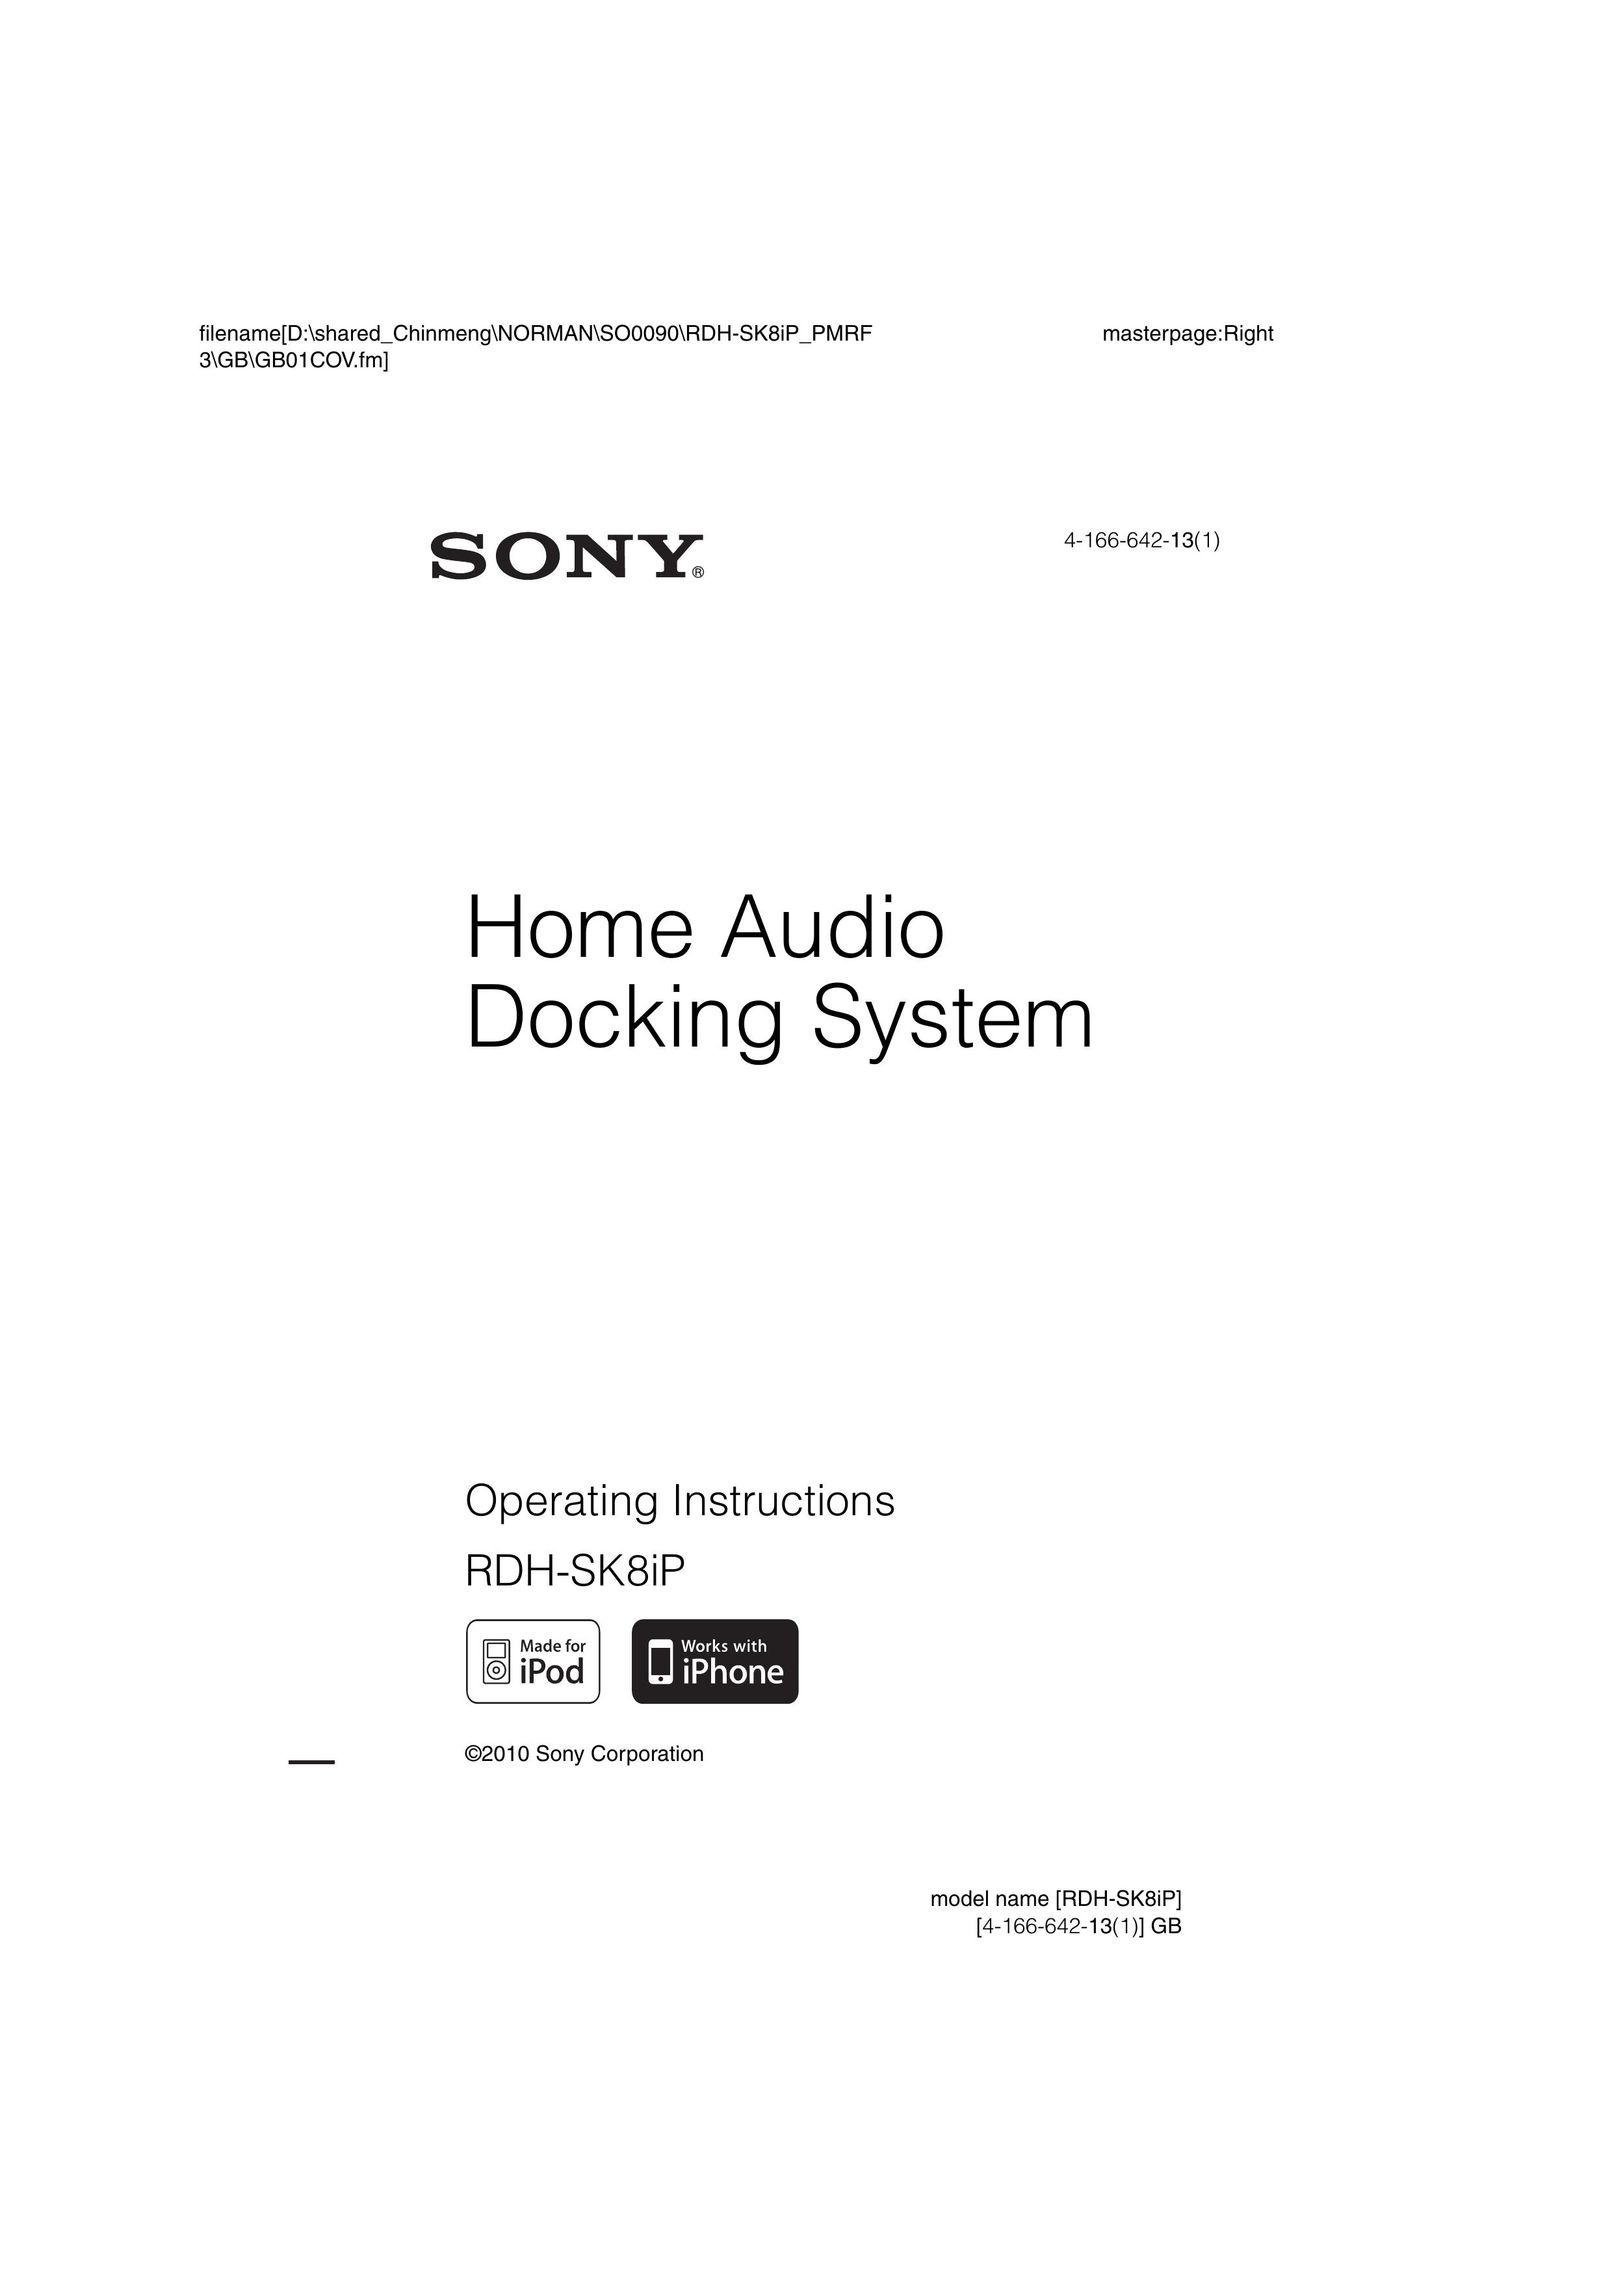 Sony RDH-SK8iP Speaker User Manual